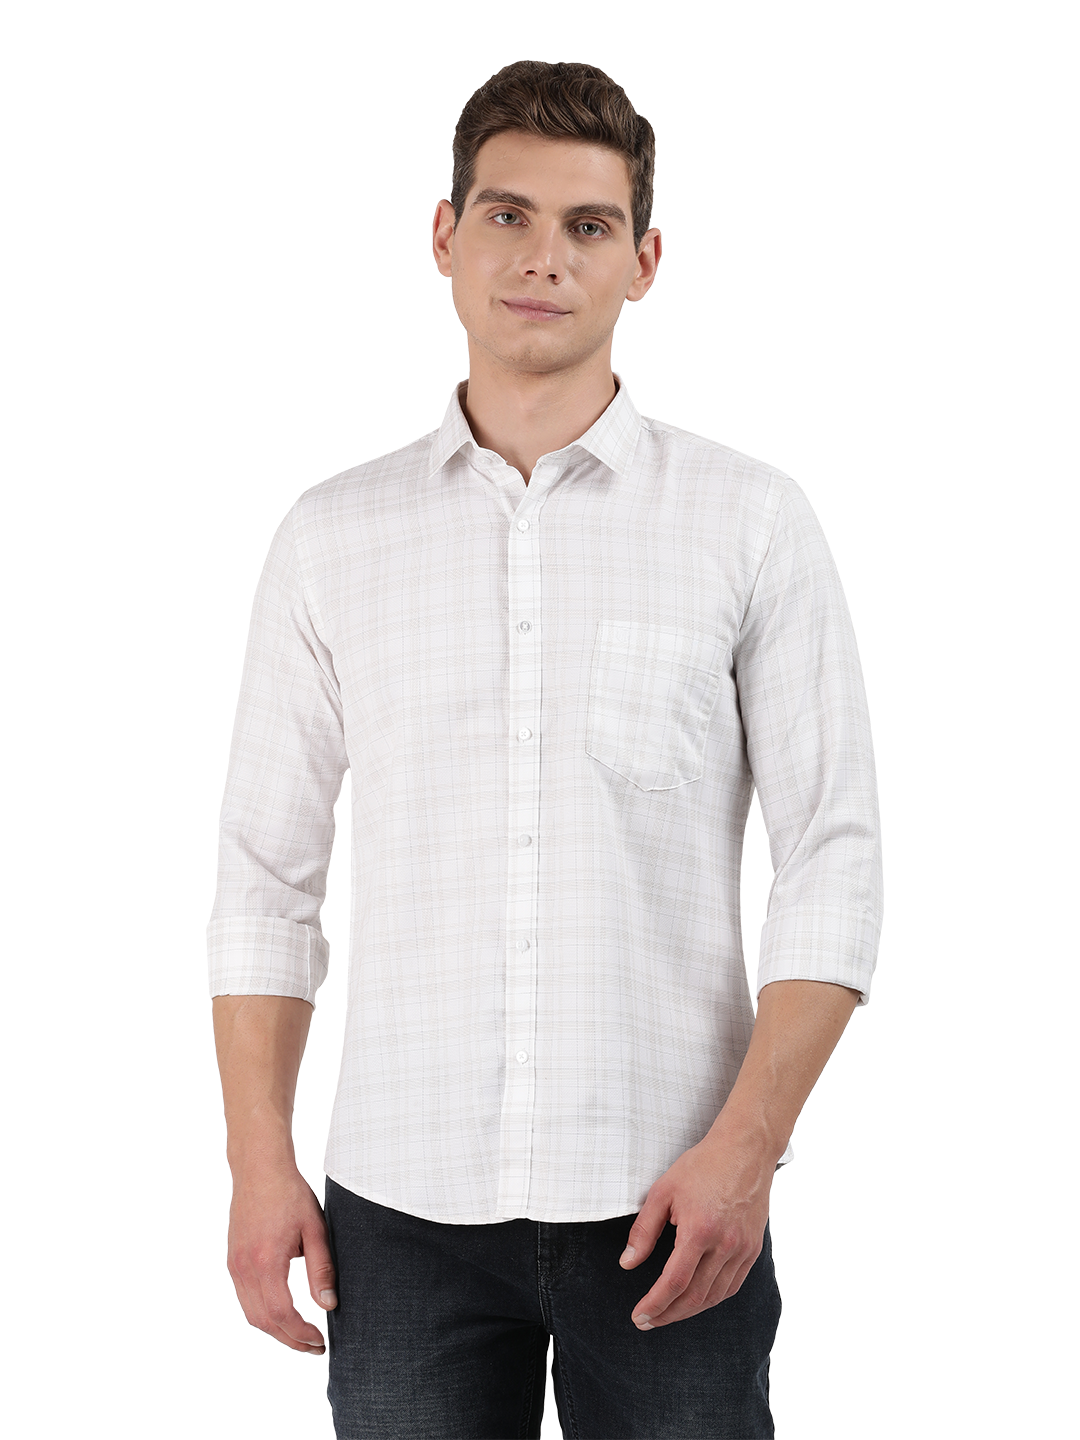 Mens Check Shirts Online India, Buy Check Shirts for Men – ottostore.com